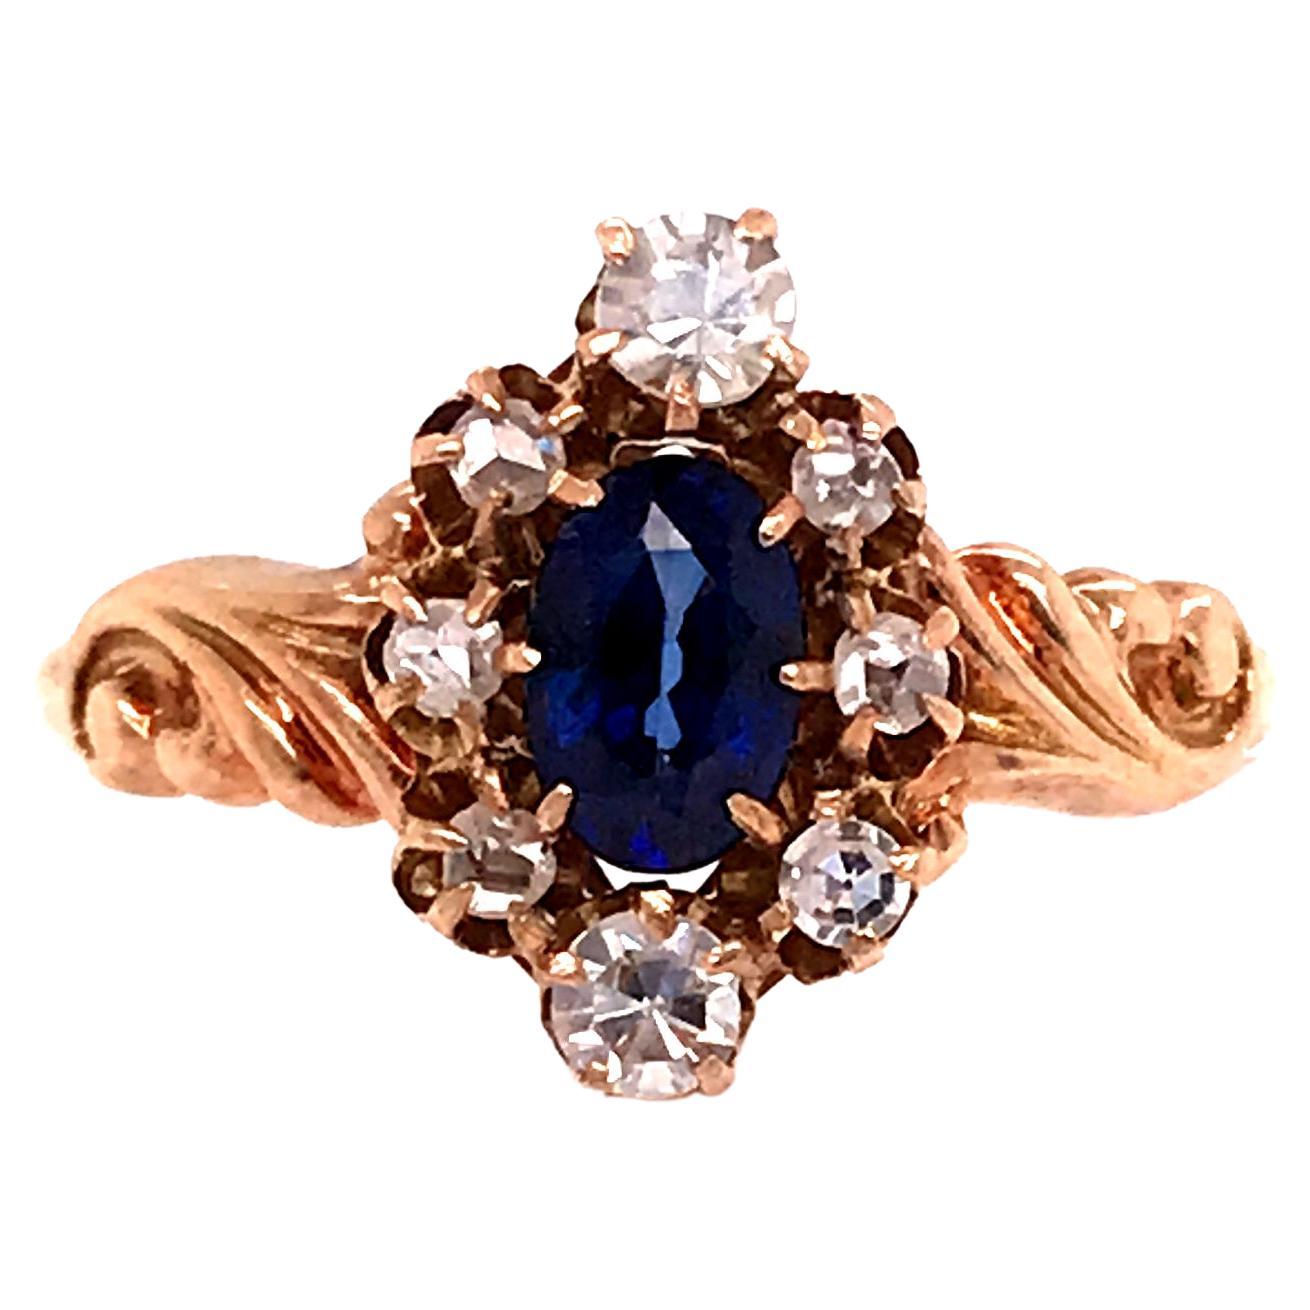 Edwardian Sapphire Diamond Engagement Ring 1.10ct Oval Vintage Antique 14K